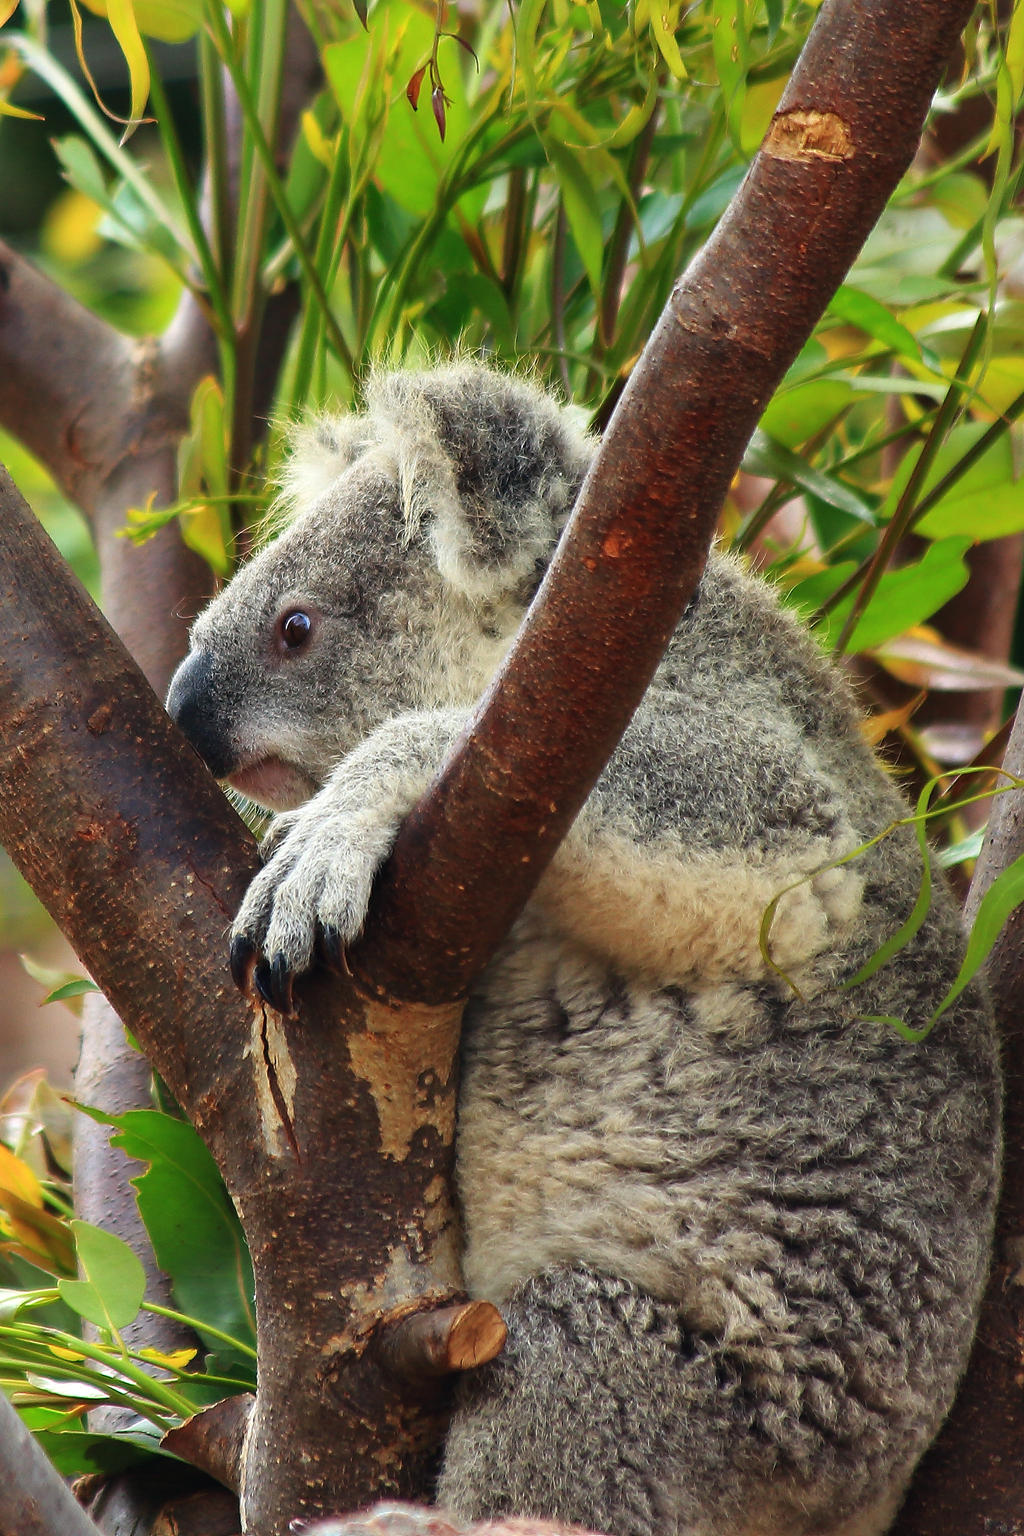 Wide eyed Koala sees Monday coming...